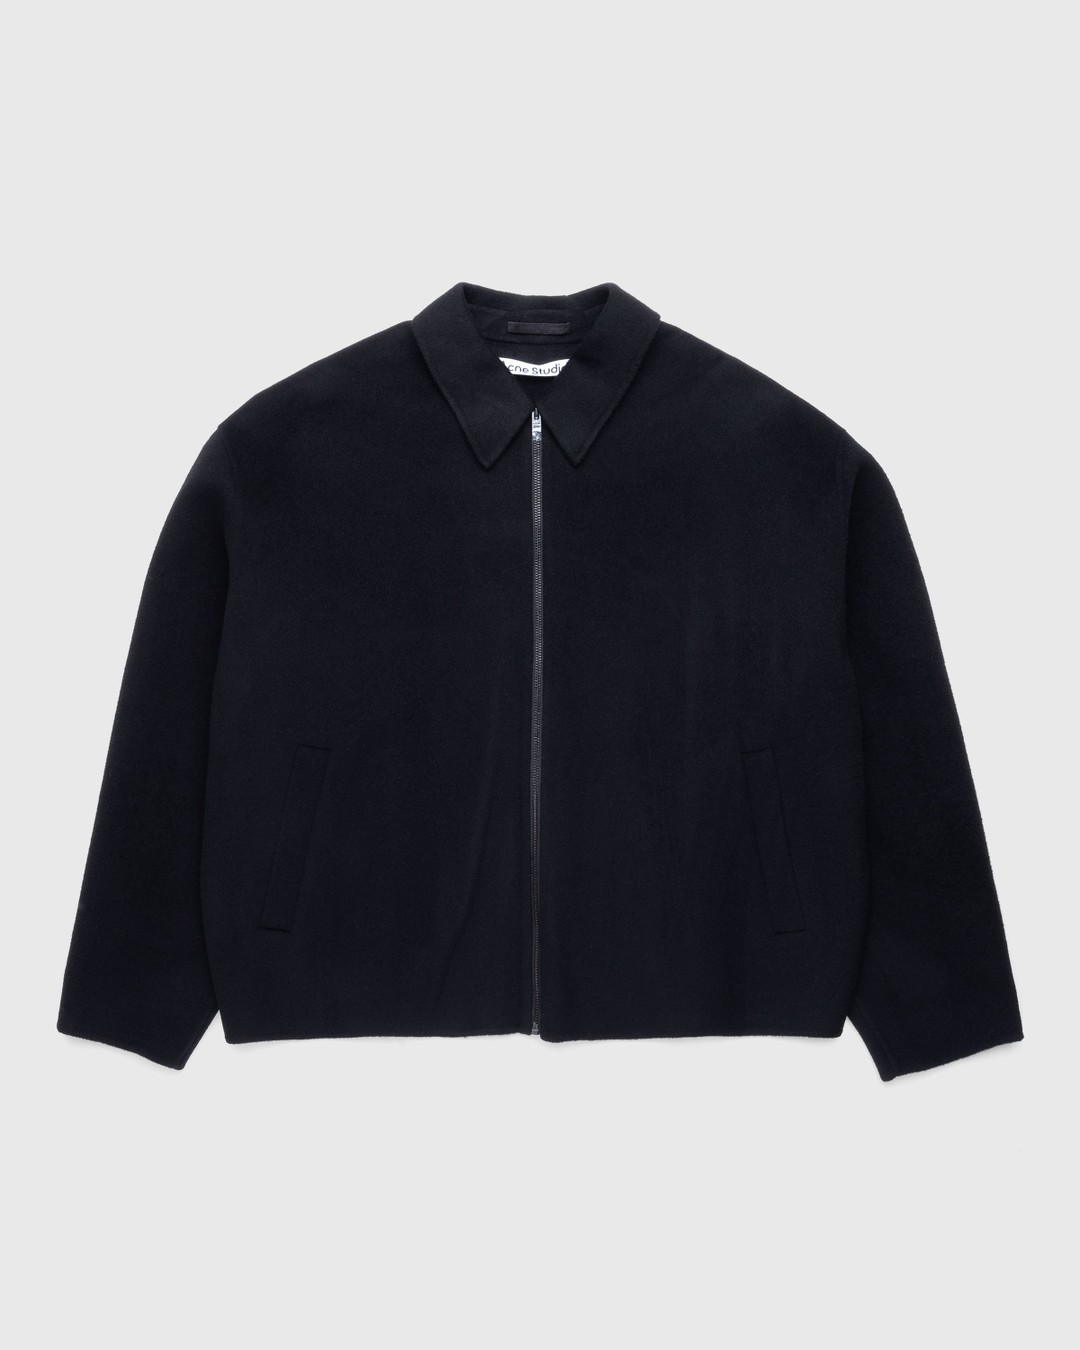 Acne Studios – Wool Zipper Jacket Black - Jackets - Black - Image 1